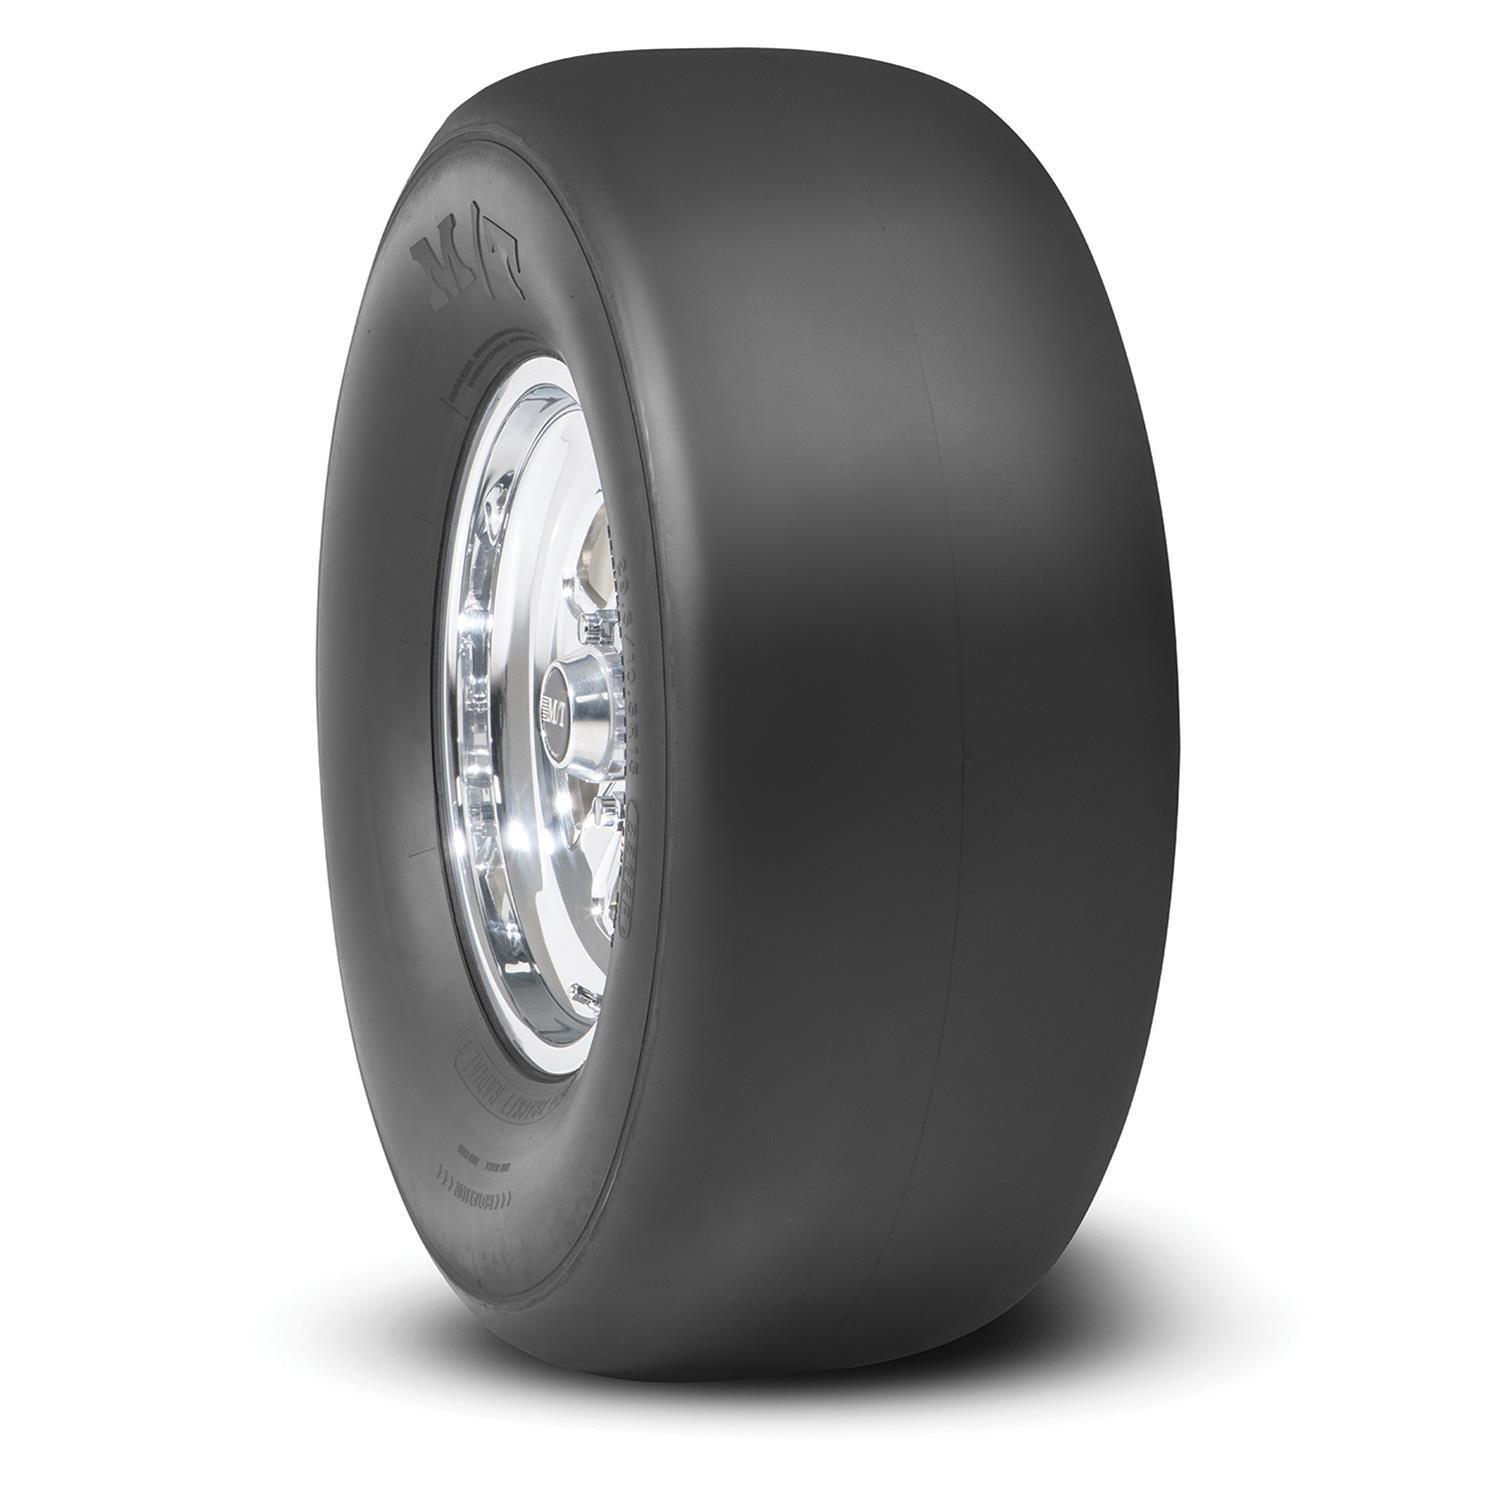 29.5/10.5R15x5 Drag Pro Bracket Radial Tire - Burlile Performance Products